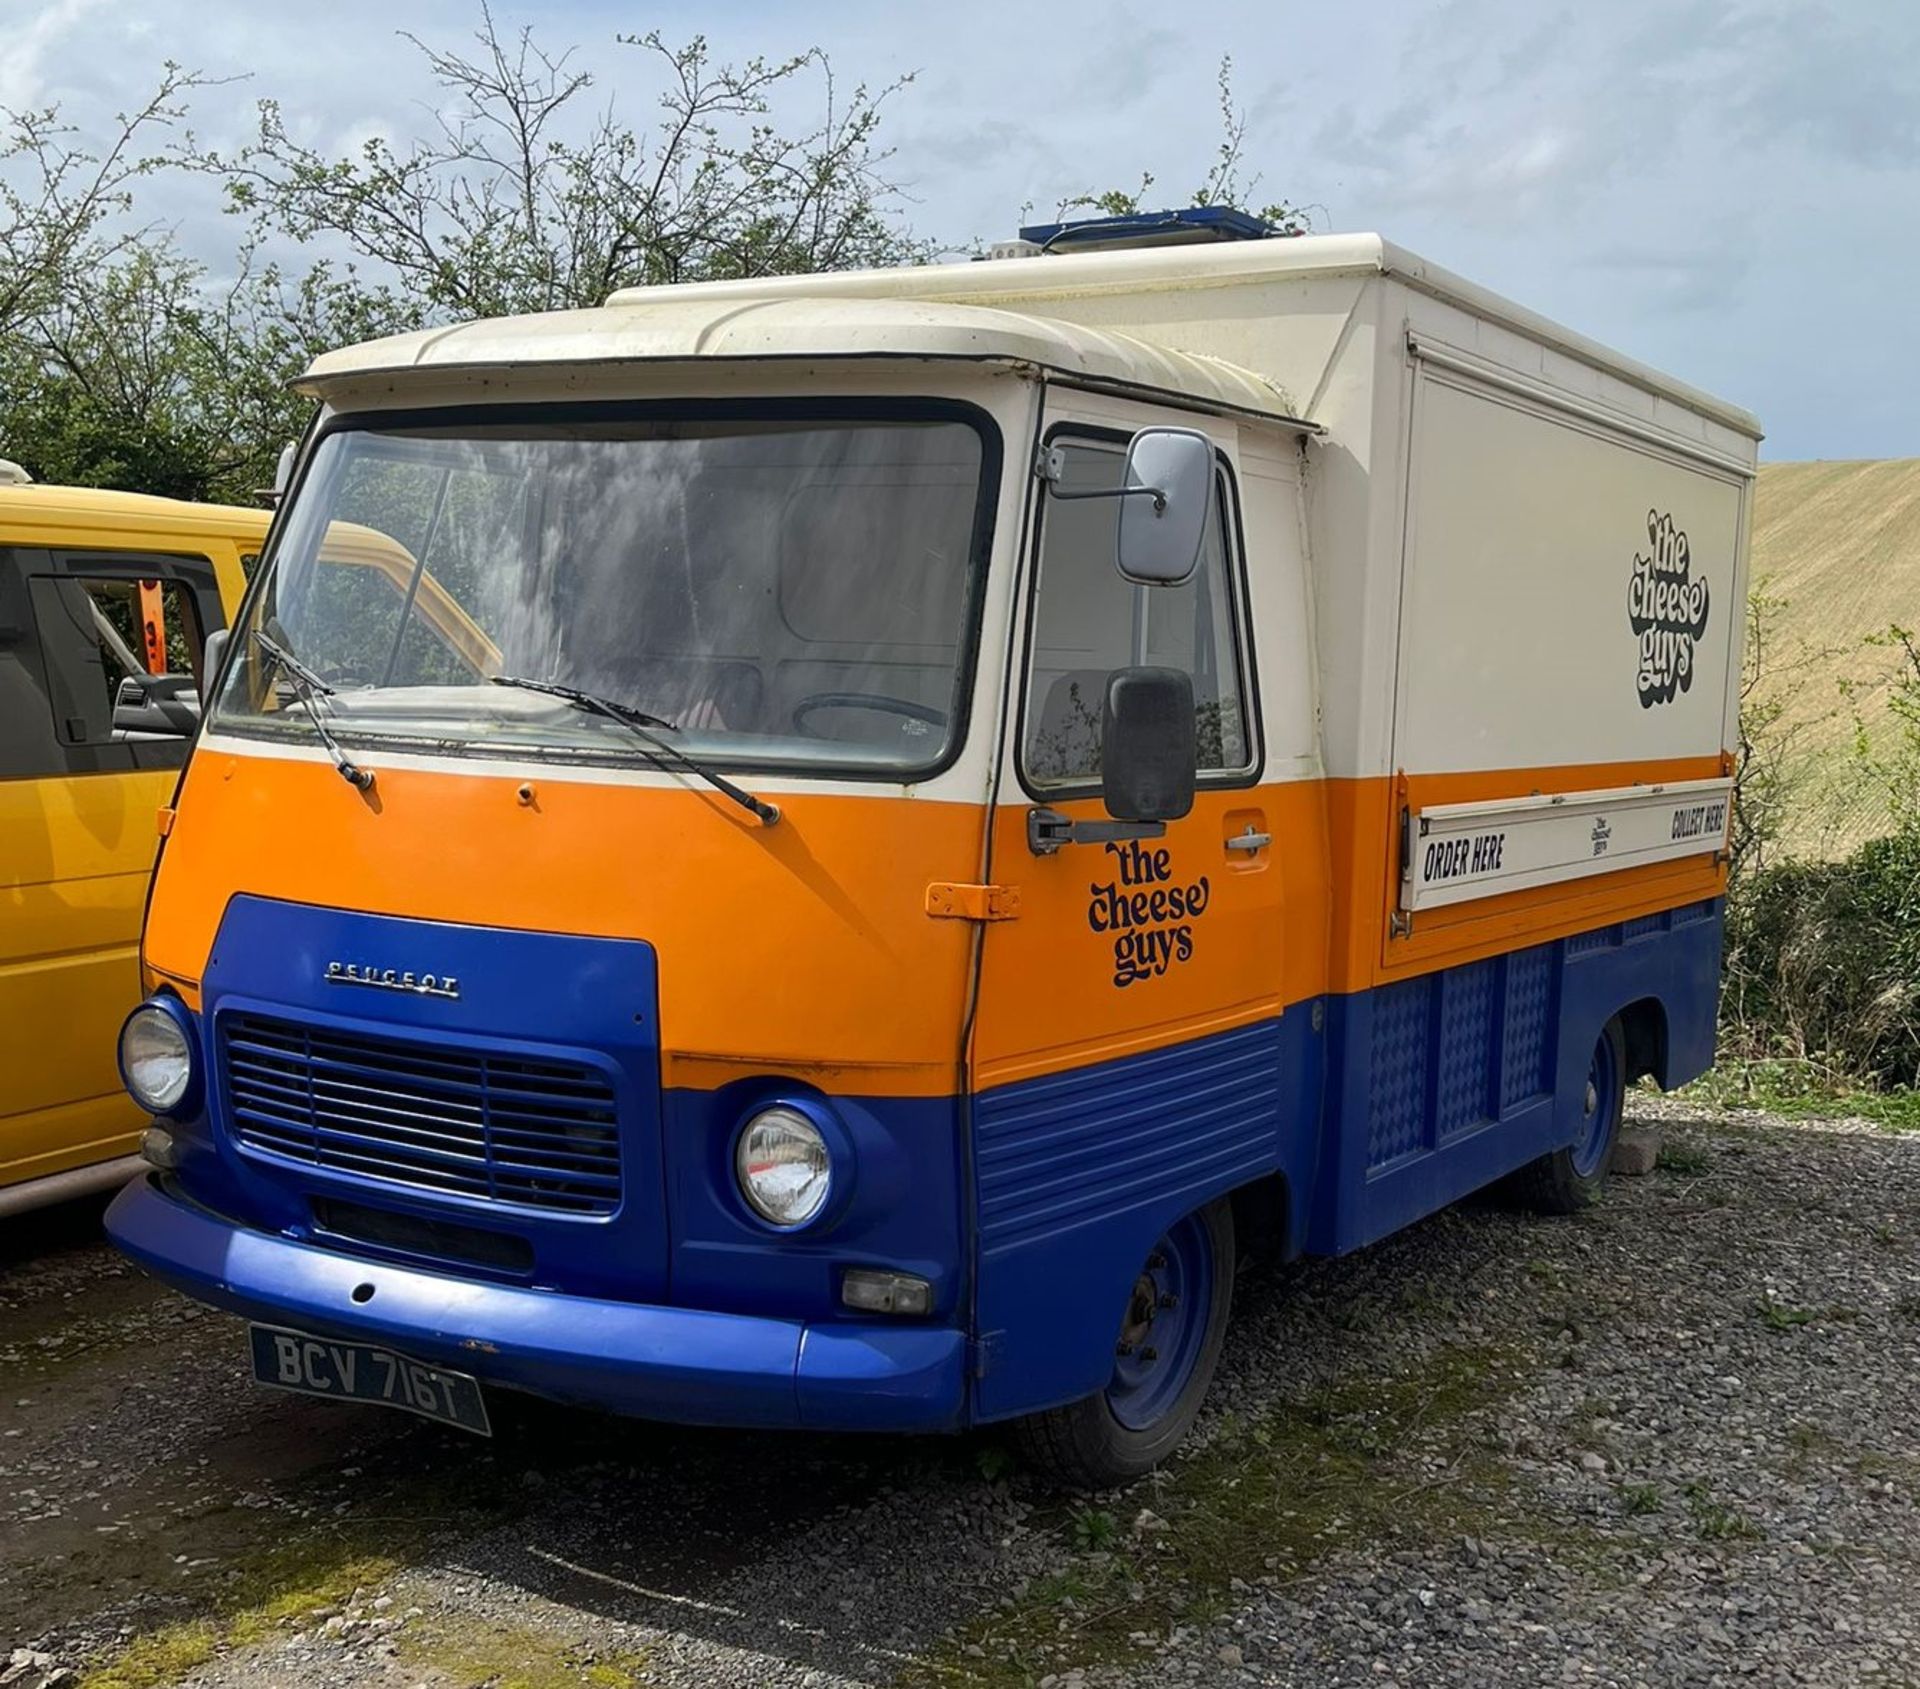 Peugeot J7 converted food truck. Odometer reading 160,049 kilometres, Manufactured 1979, converted